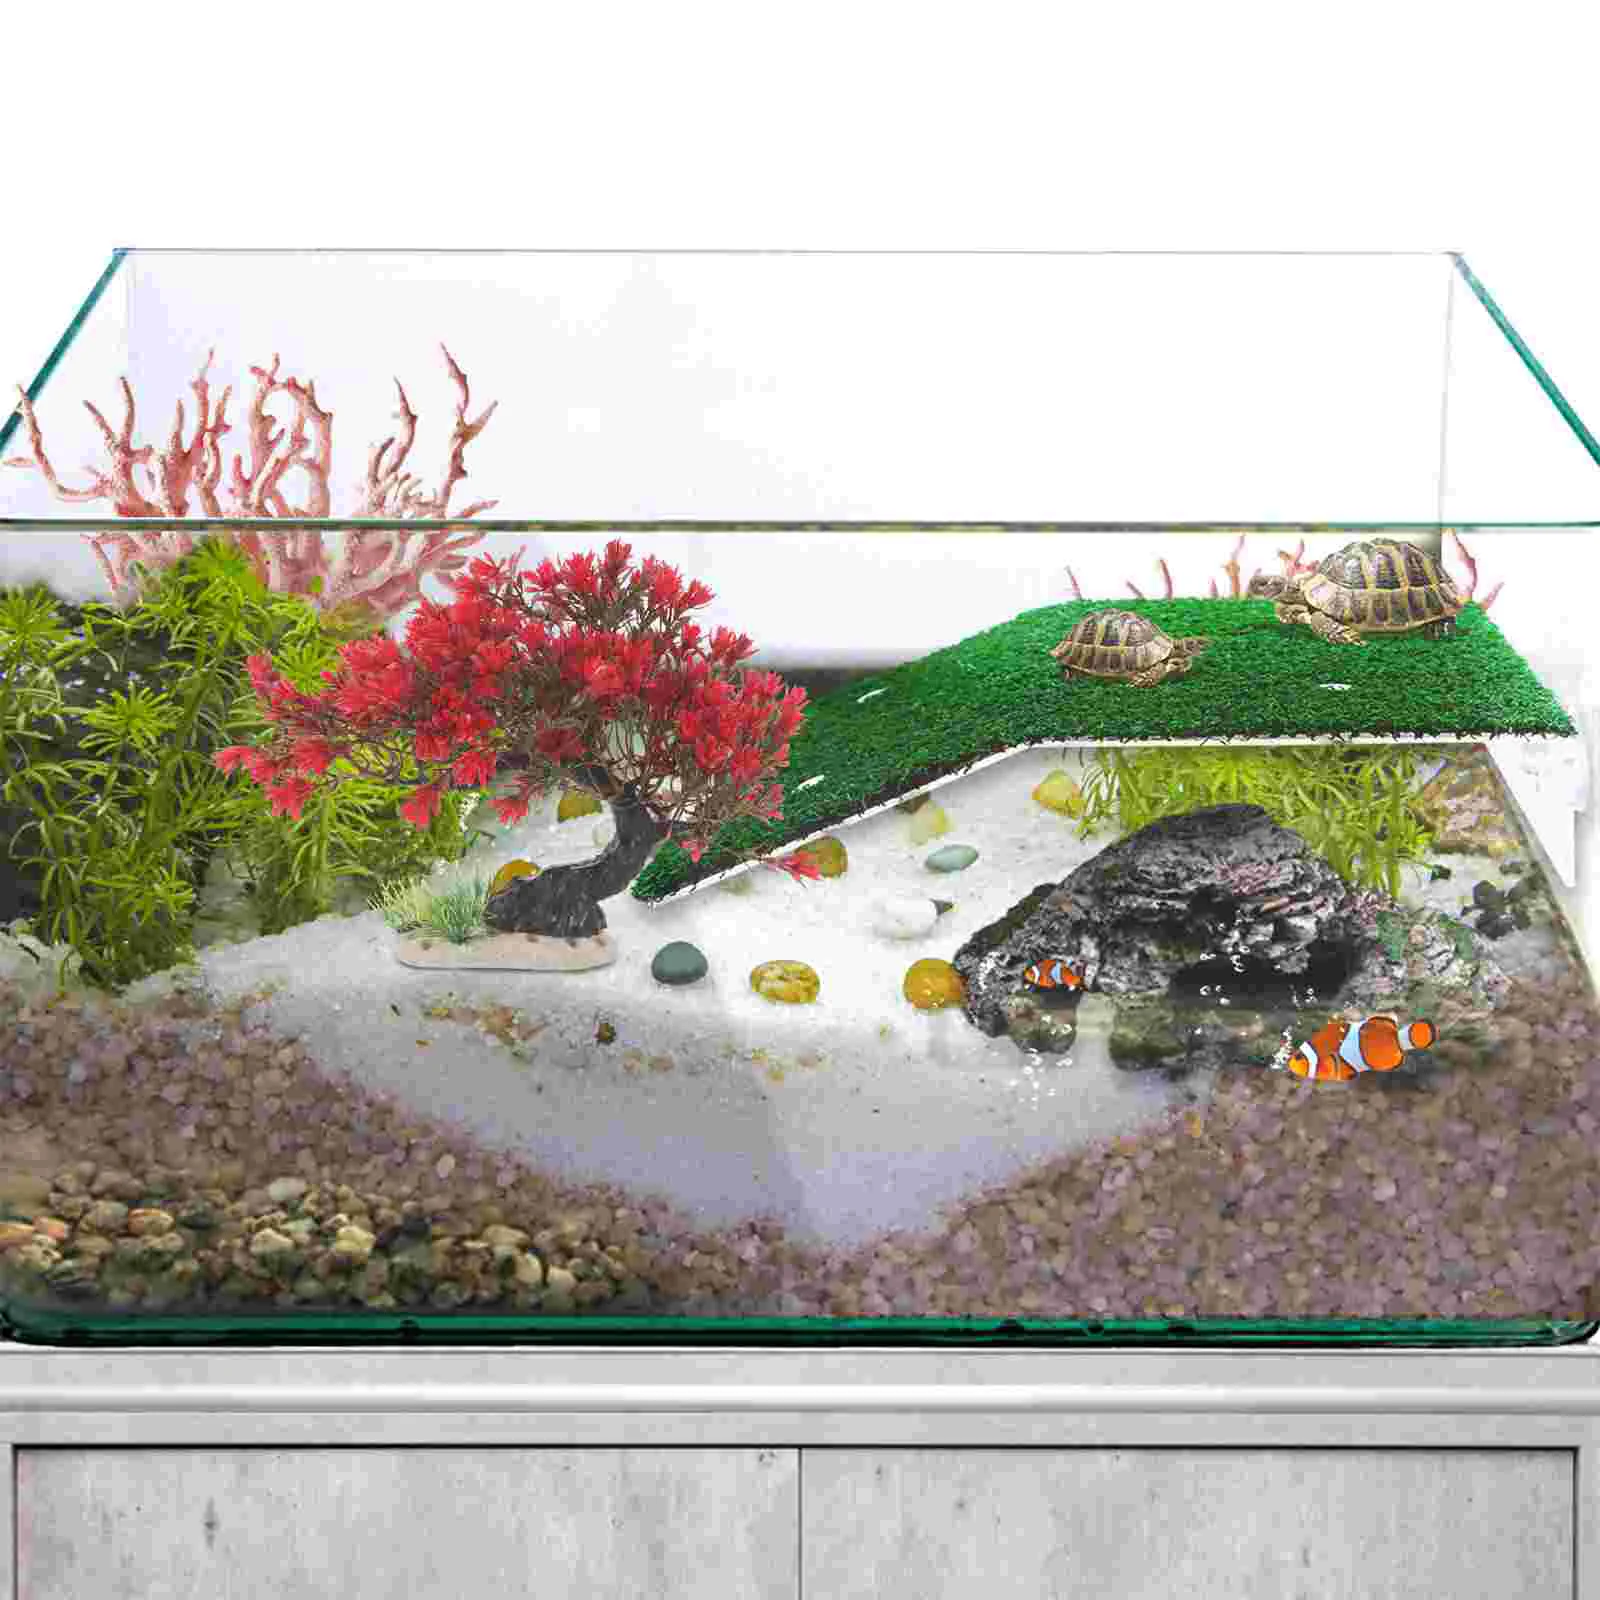 

Fish Tank Landscaping Tree Fake Grass Aquarium Decor Accessories Decorations Large Tall Plants Plastic for